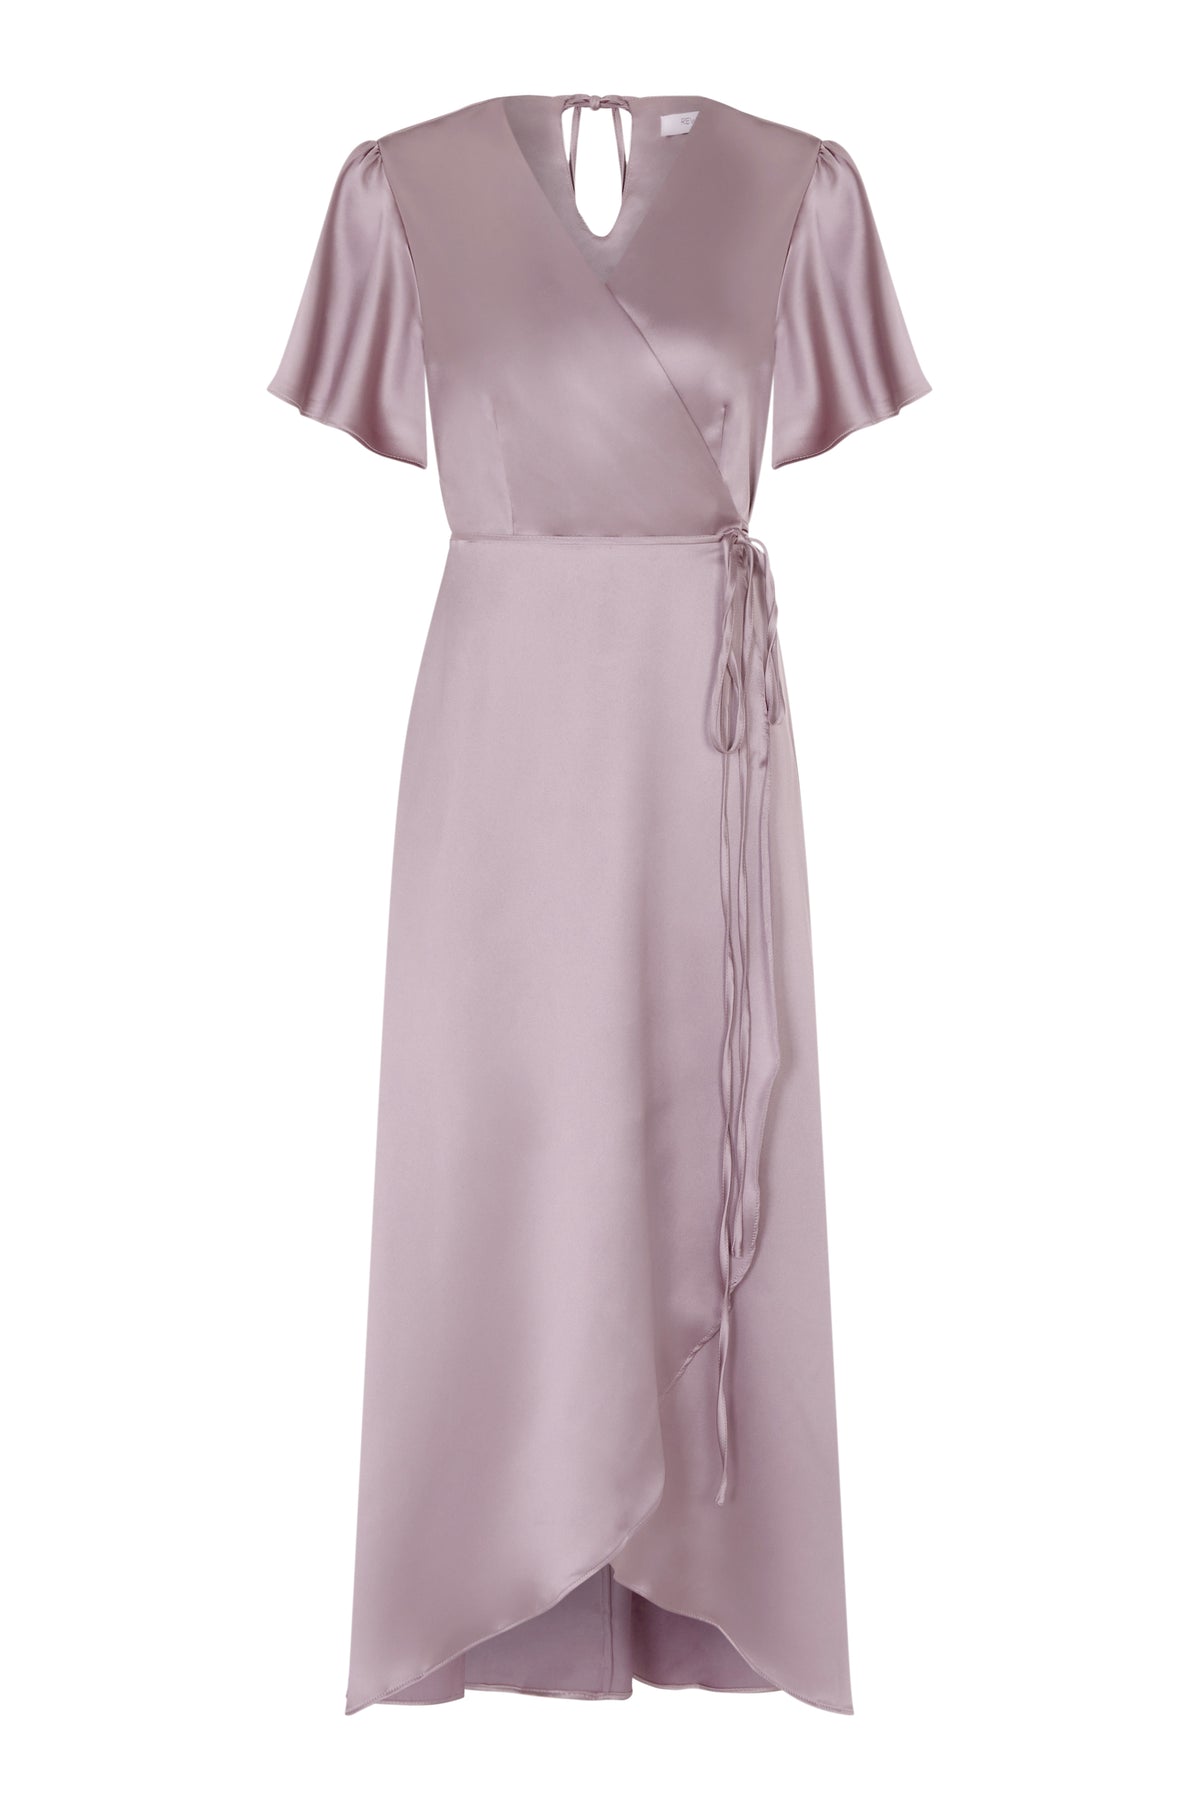 Florence Waterfall Satin Bridesmaids Wrap Dress In Mink | Rewritten ...